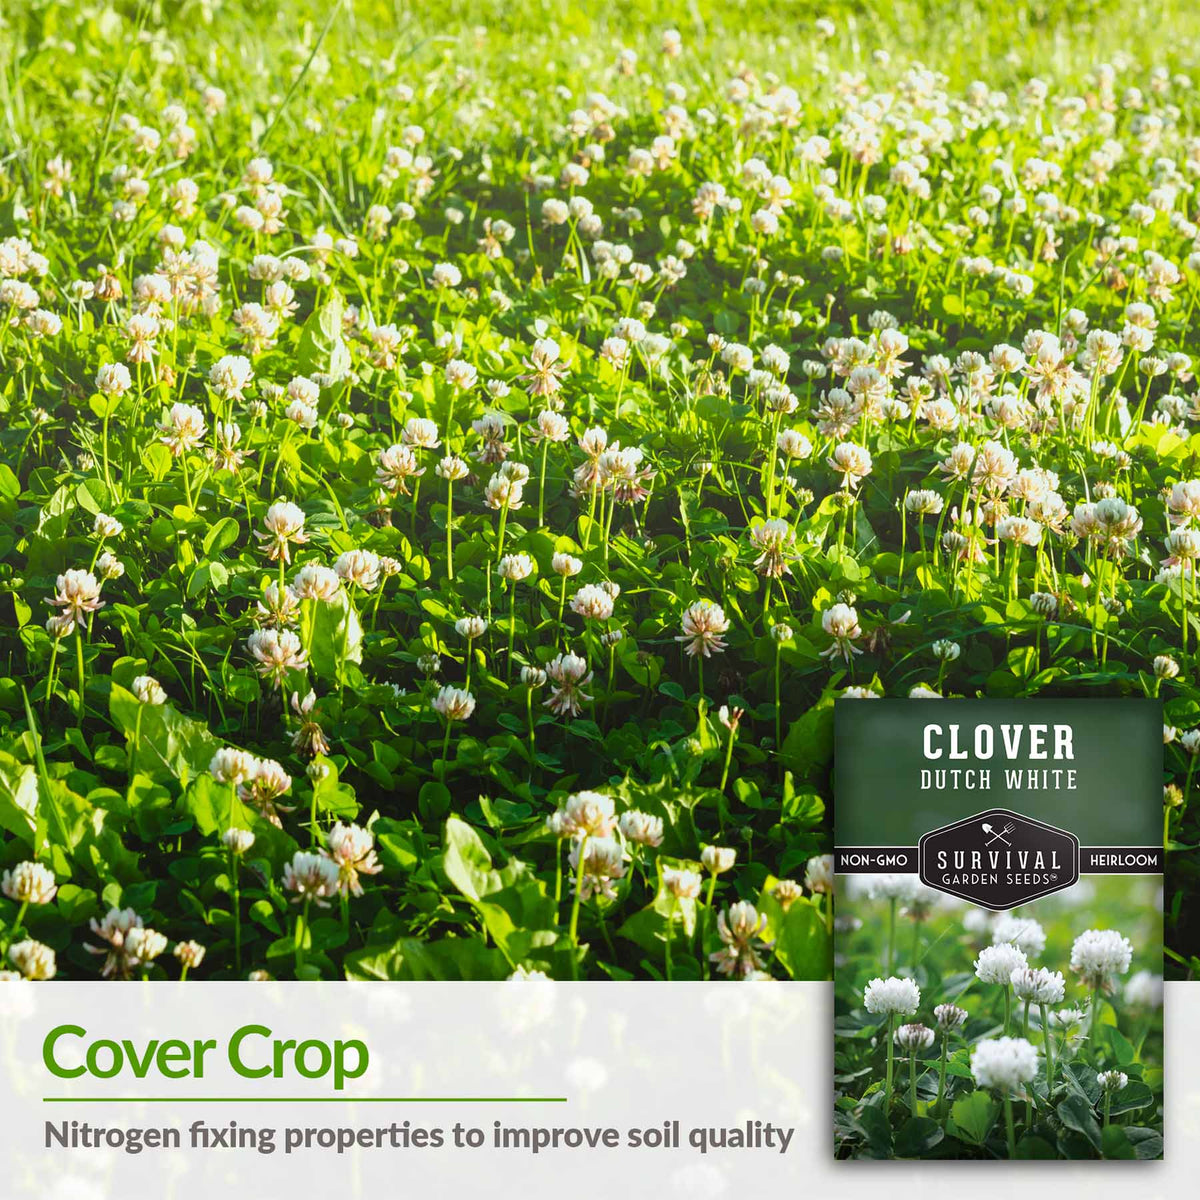 Dutch White Clover is a nitrogen fixing cover crop